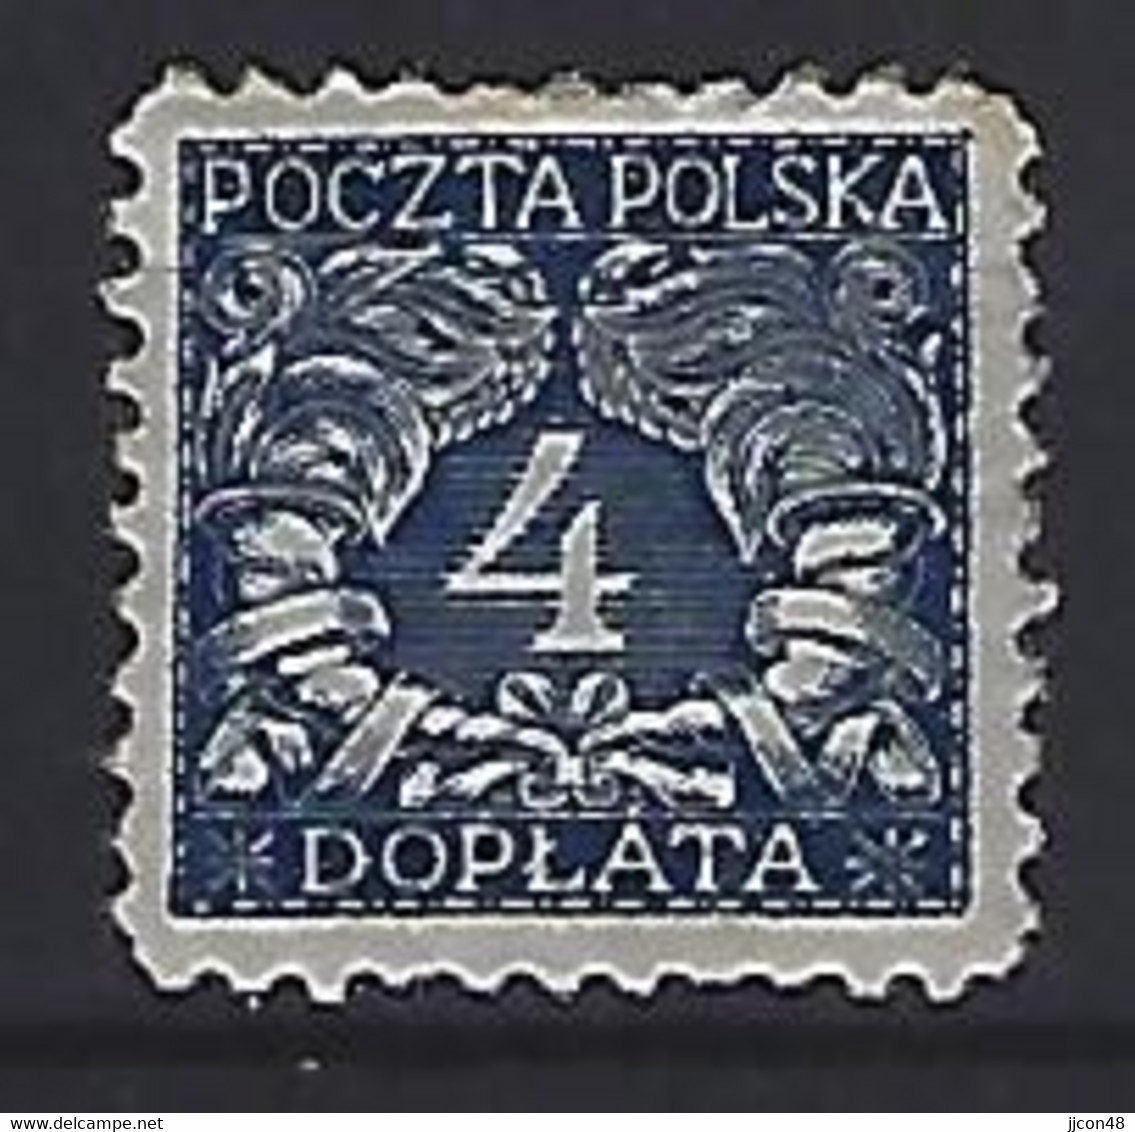 Poland 1919  Postage Due (*) MM  Mi.14 - Postage Due